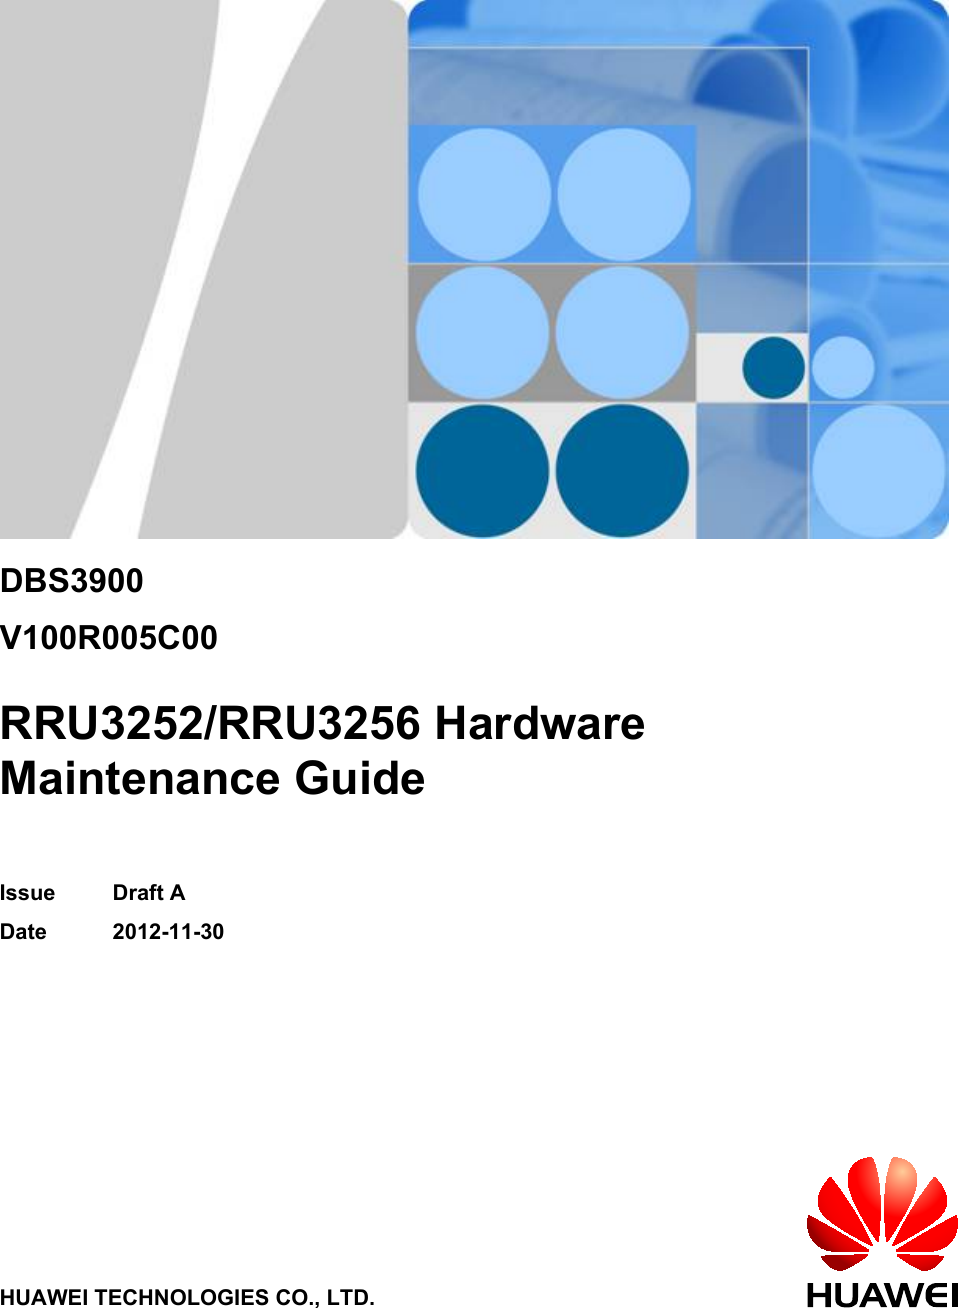 DBS3900V100R005C00RRU3252/RRU3256 HardwareMaintenance GuideIssue Draft ADate 2012-11-30HUAWEI TECHNOLOGIES CO., LTD.